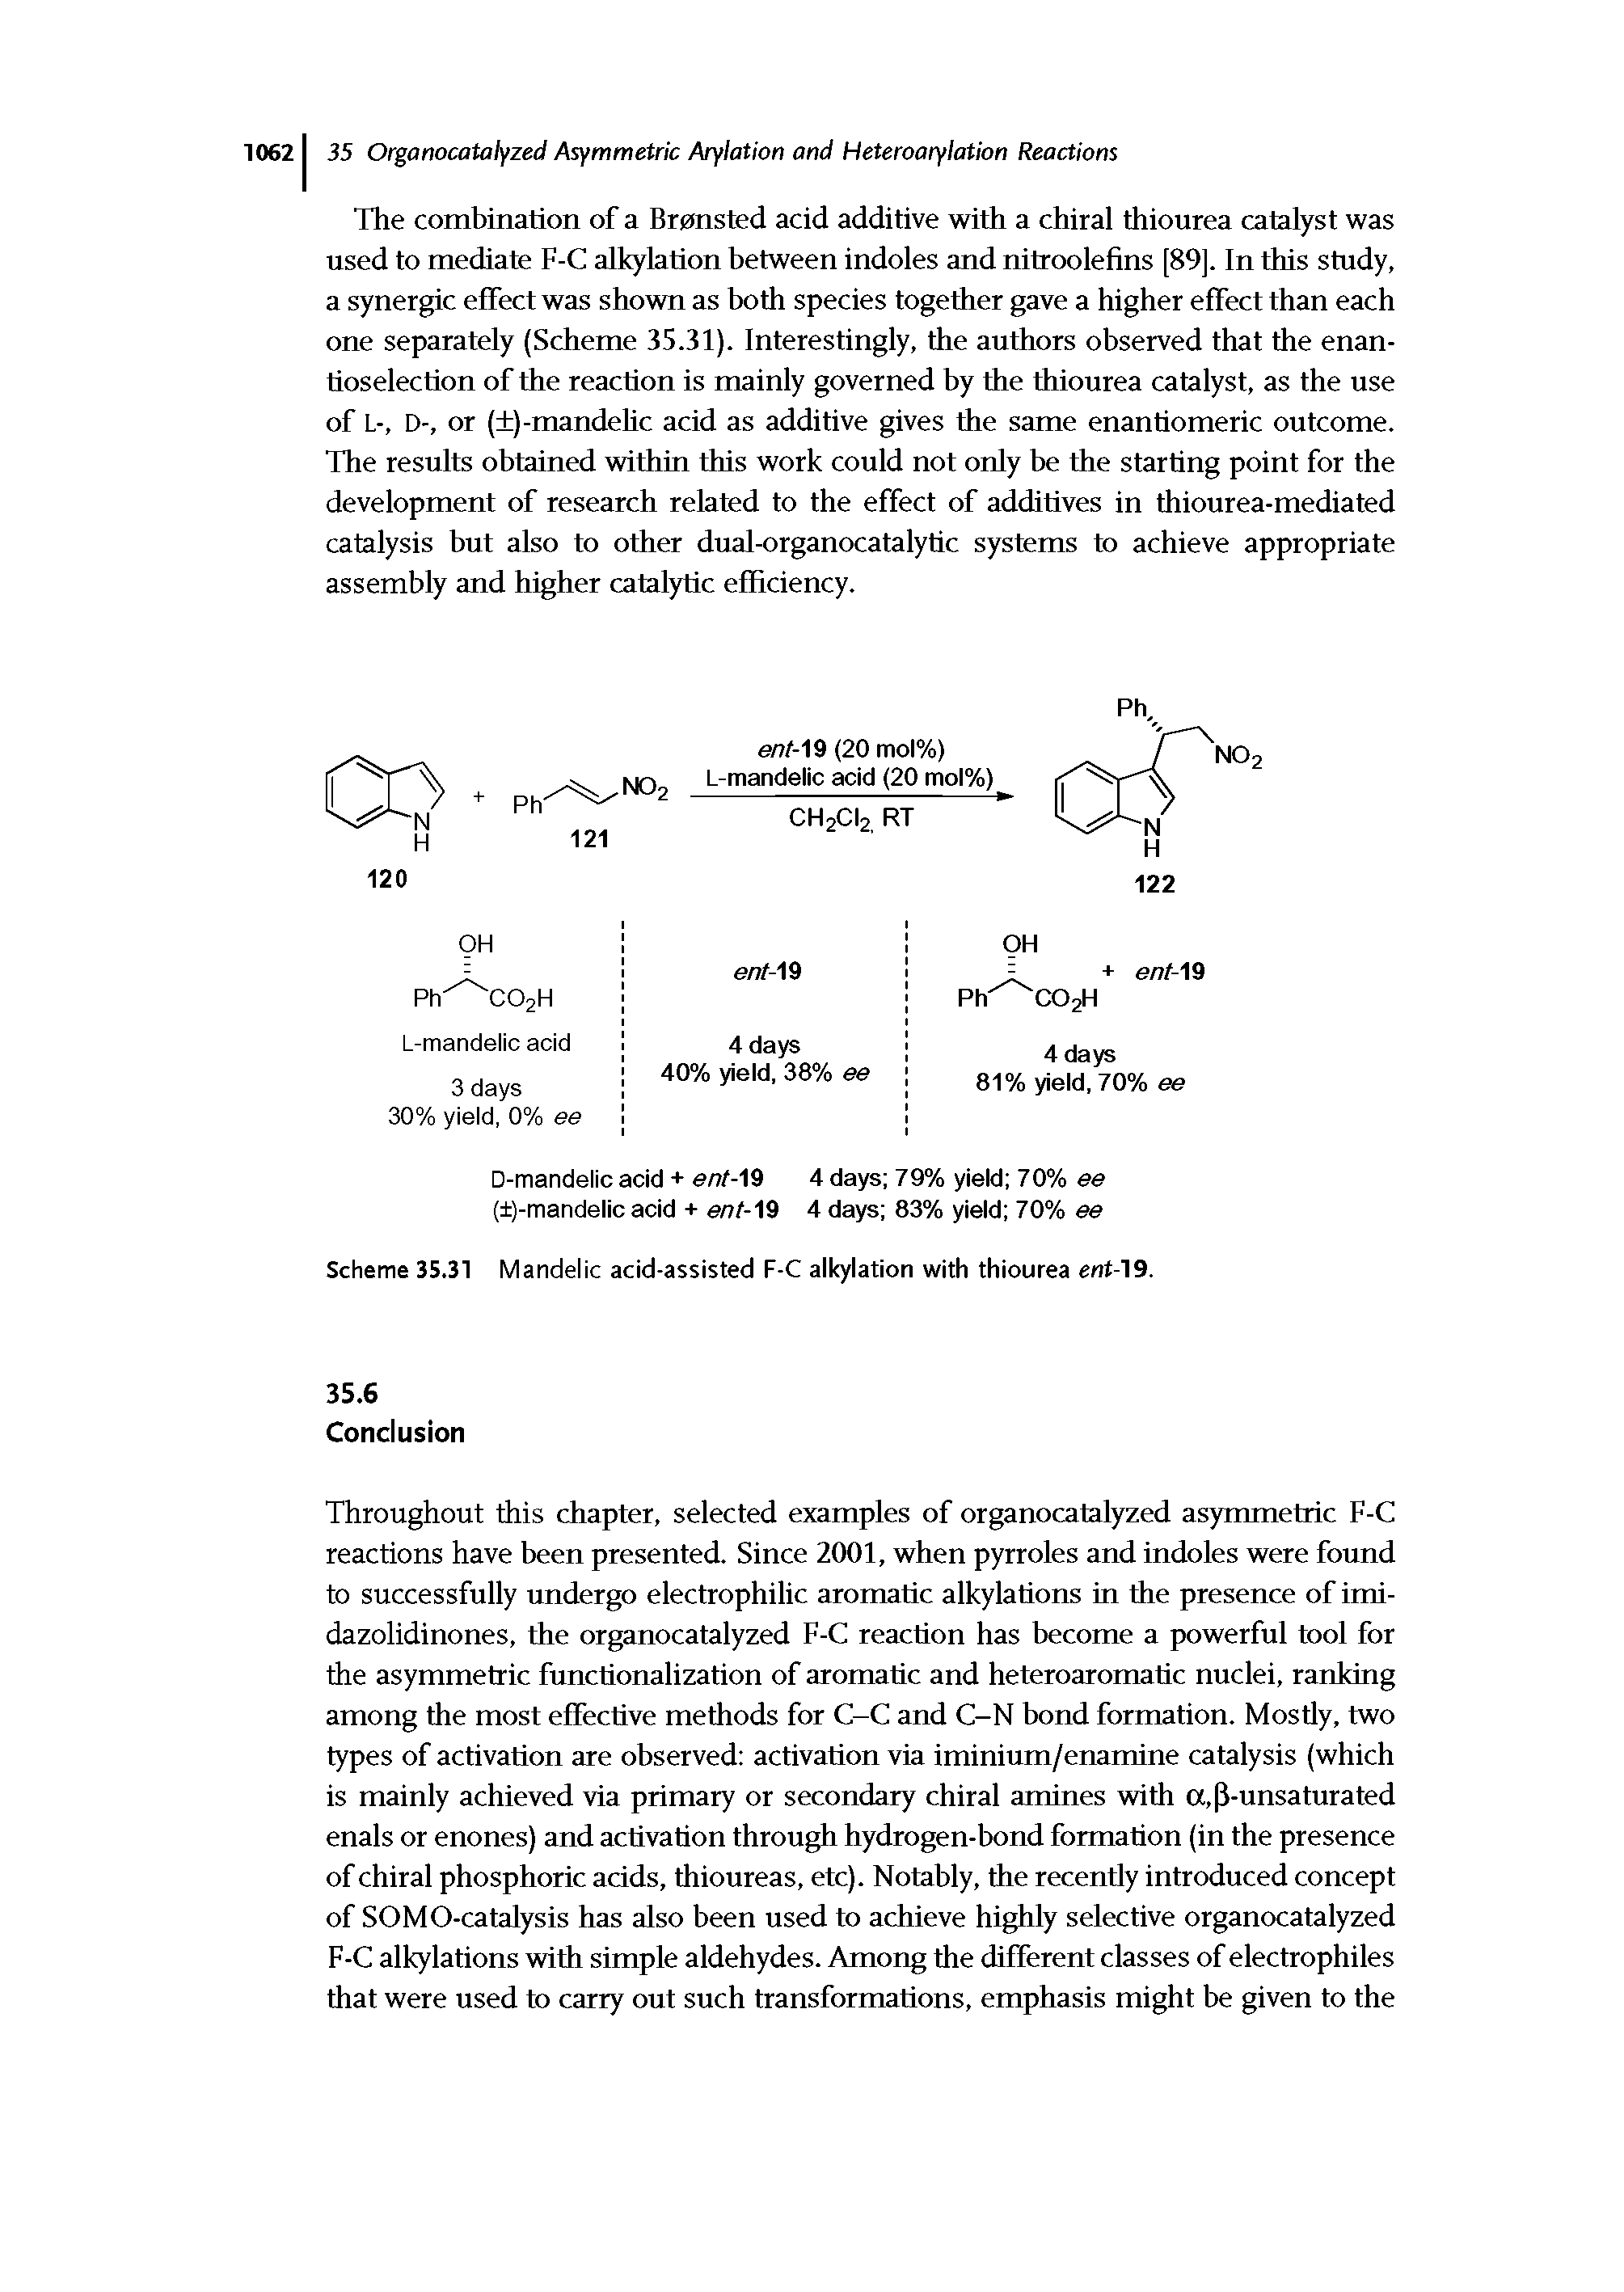 Scheme 35.31 Mandelic acid-assisted F-C alkylation with thiourea ent-19.